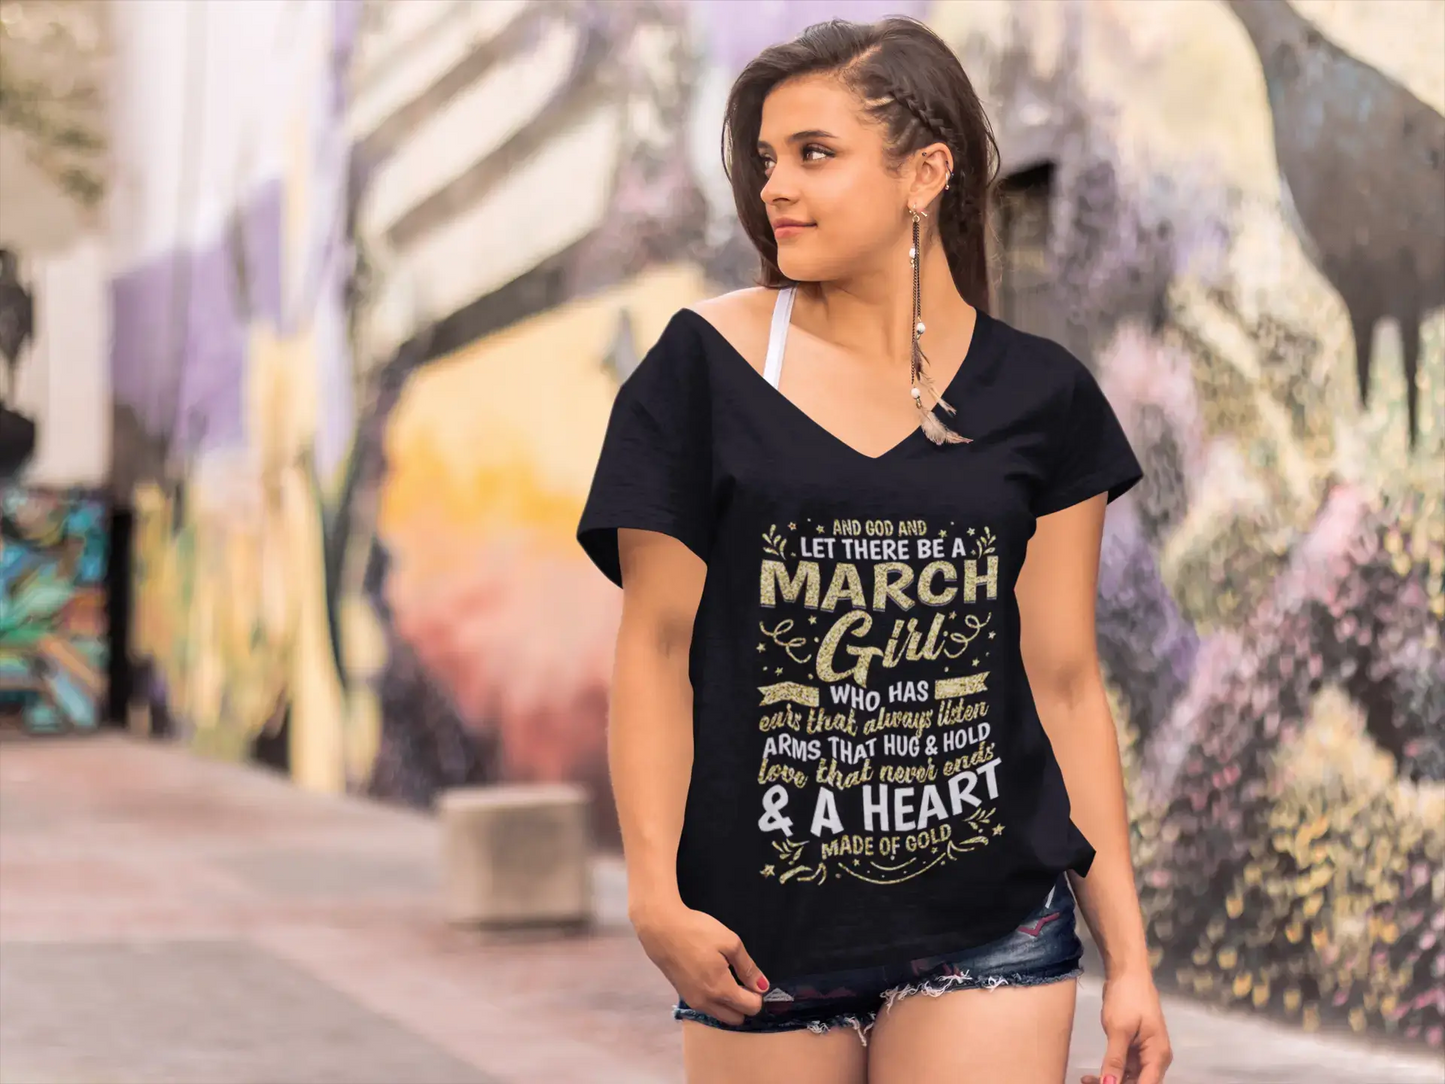 ULTRABASIC Women's T-Shirt March Girl Heart Made of Gold - Birthday Shirt Gift for Ladies